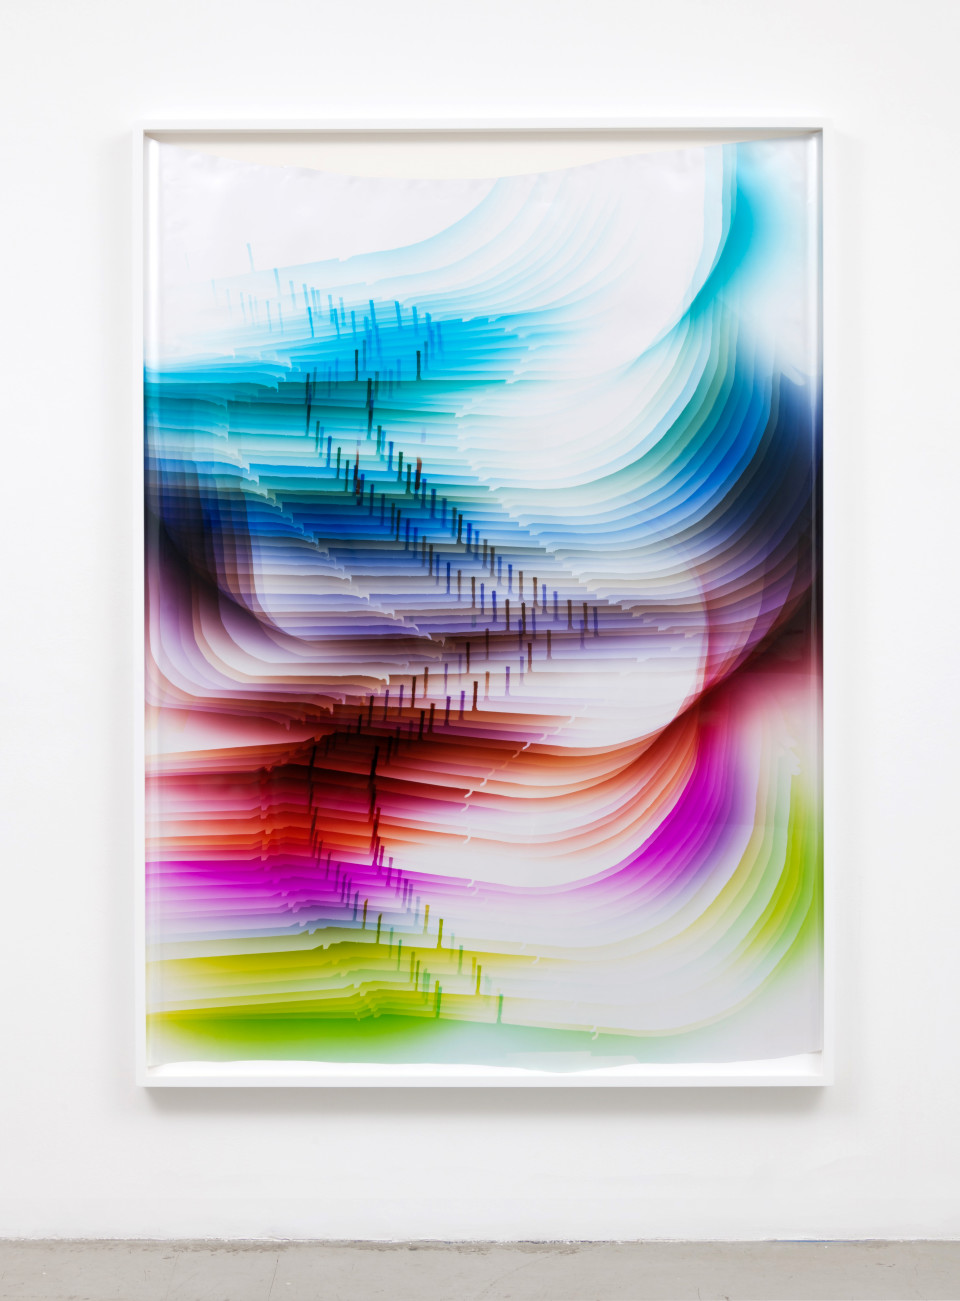 Image: Mariah Robertson  219, 2017  unique chromogenic print  68 x 49 inches (172.7 x 124.5 cm)